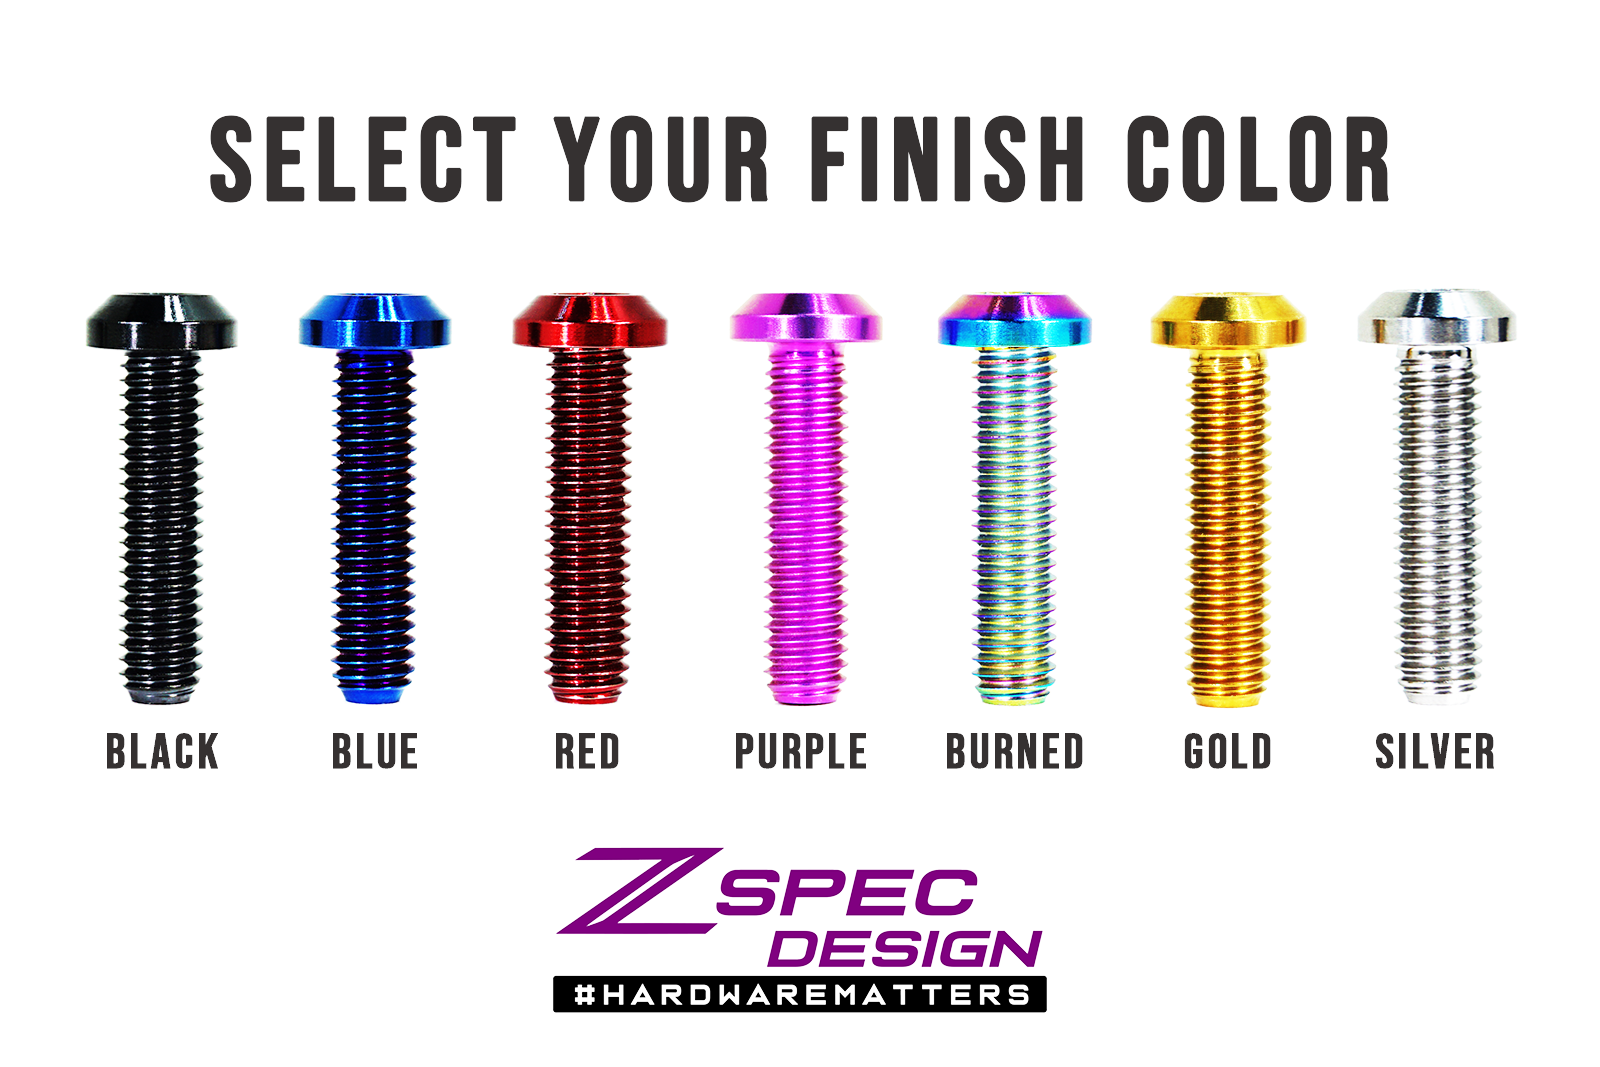 ZSPEC Design Dress Up Bolts Hardware Titanium Grade 5 GR5 Engine Bay Wide Body Kit Fender Flare Upgrade Performance